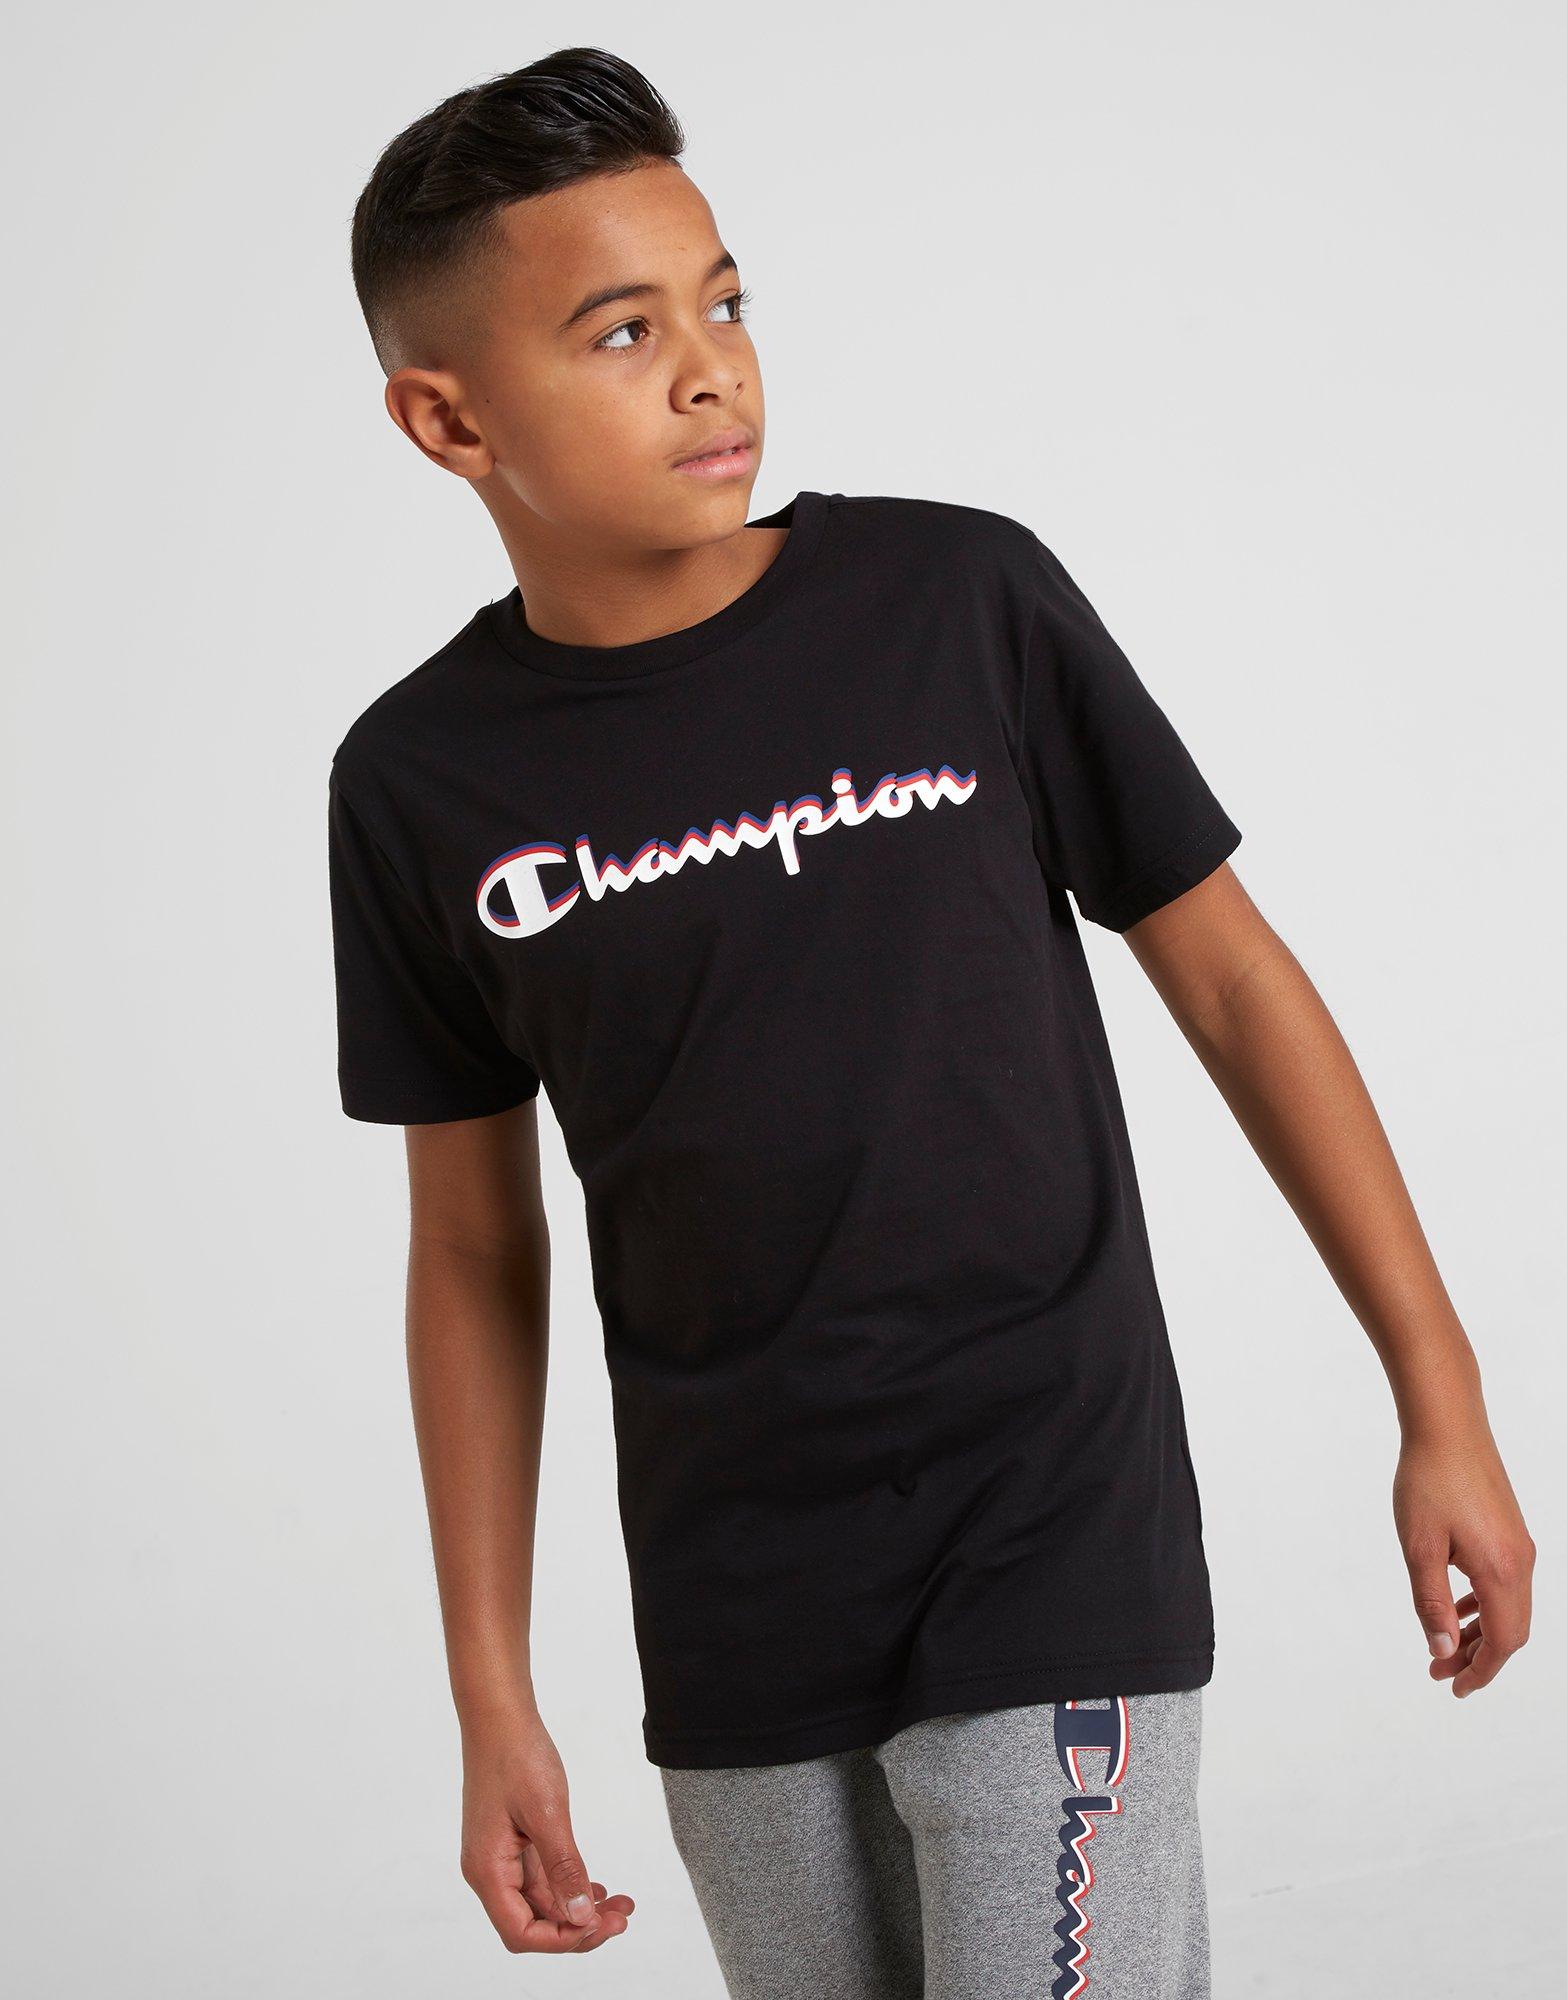 champion large logo t shirt